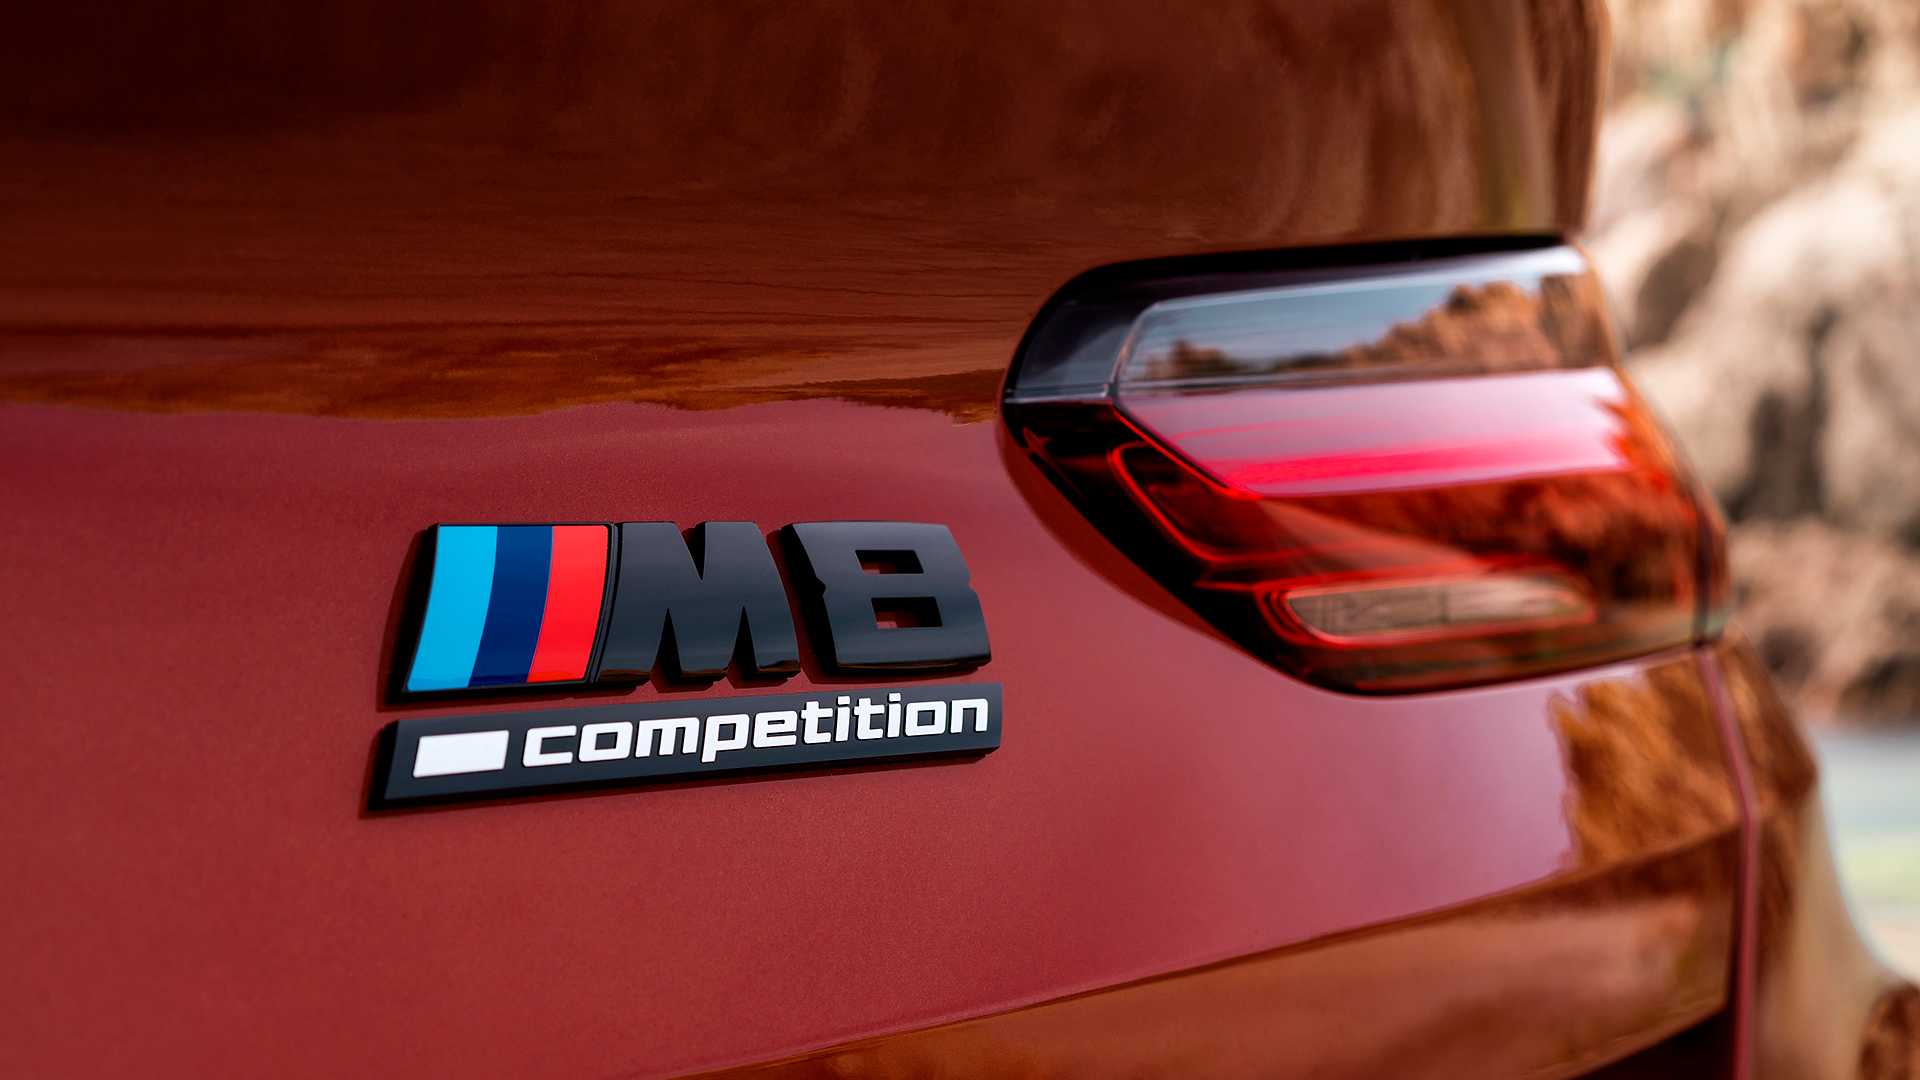 bmw m8 competition cabrio